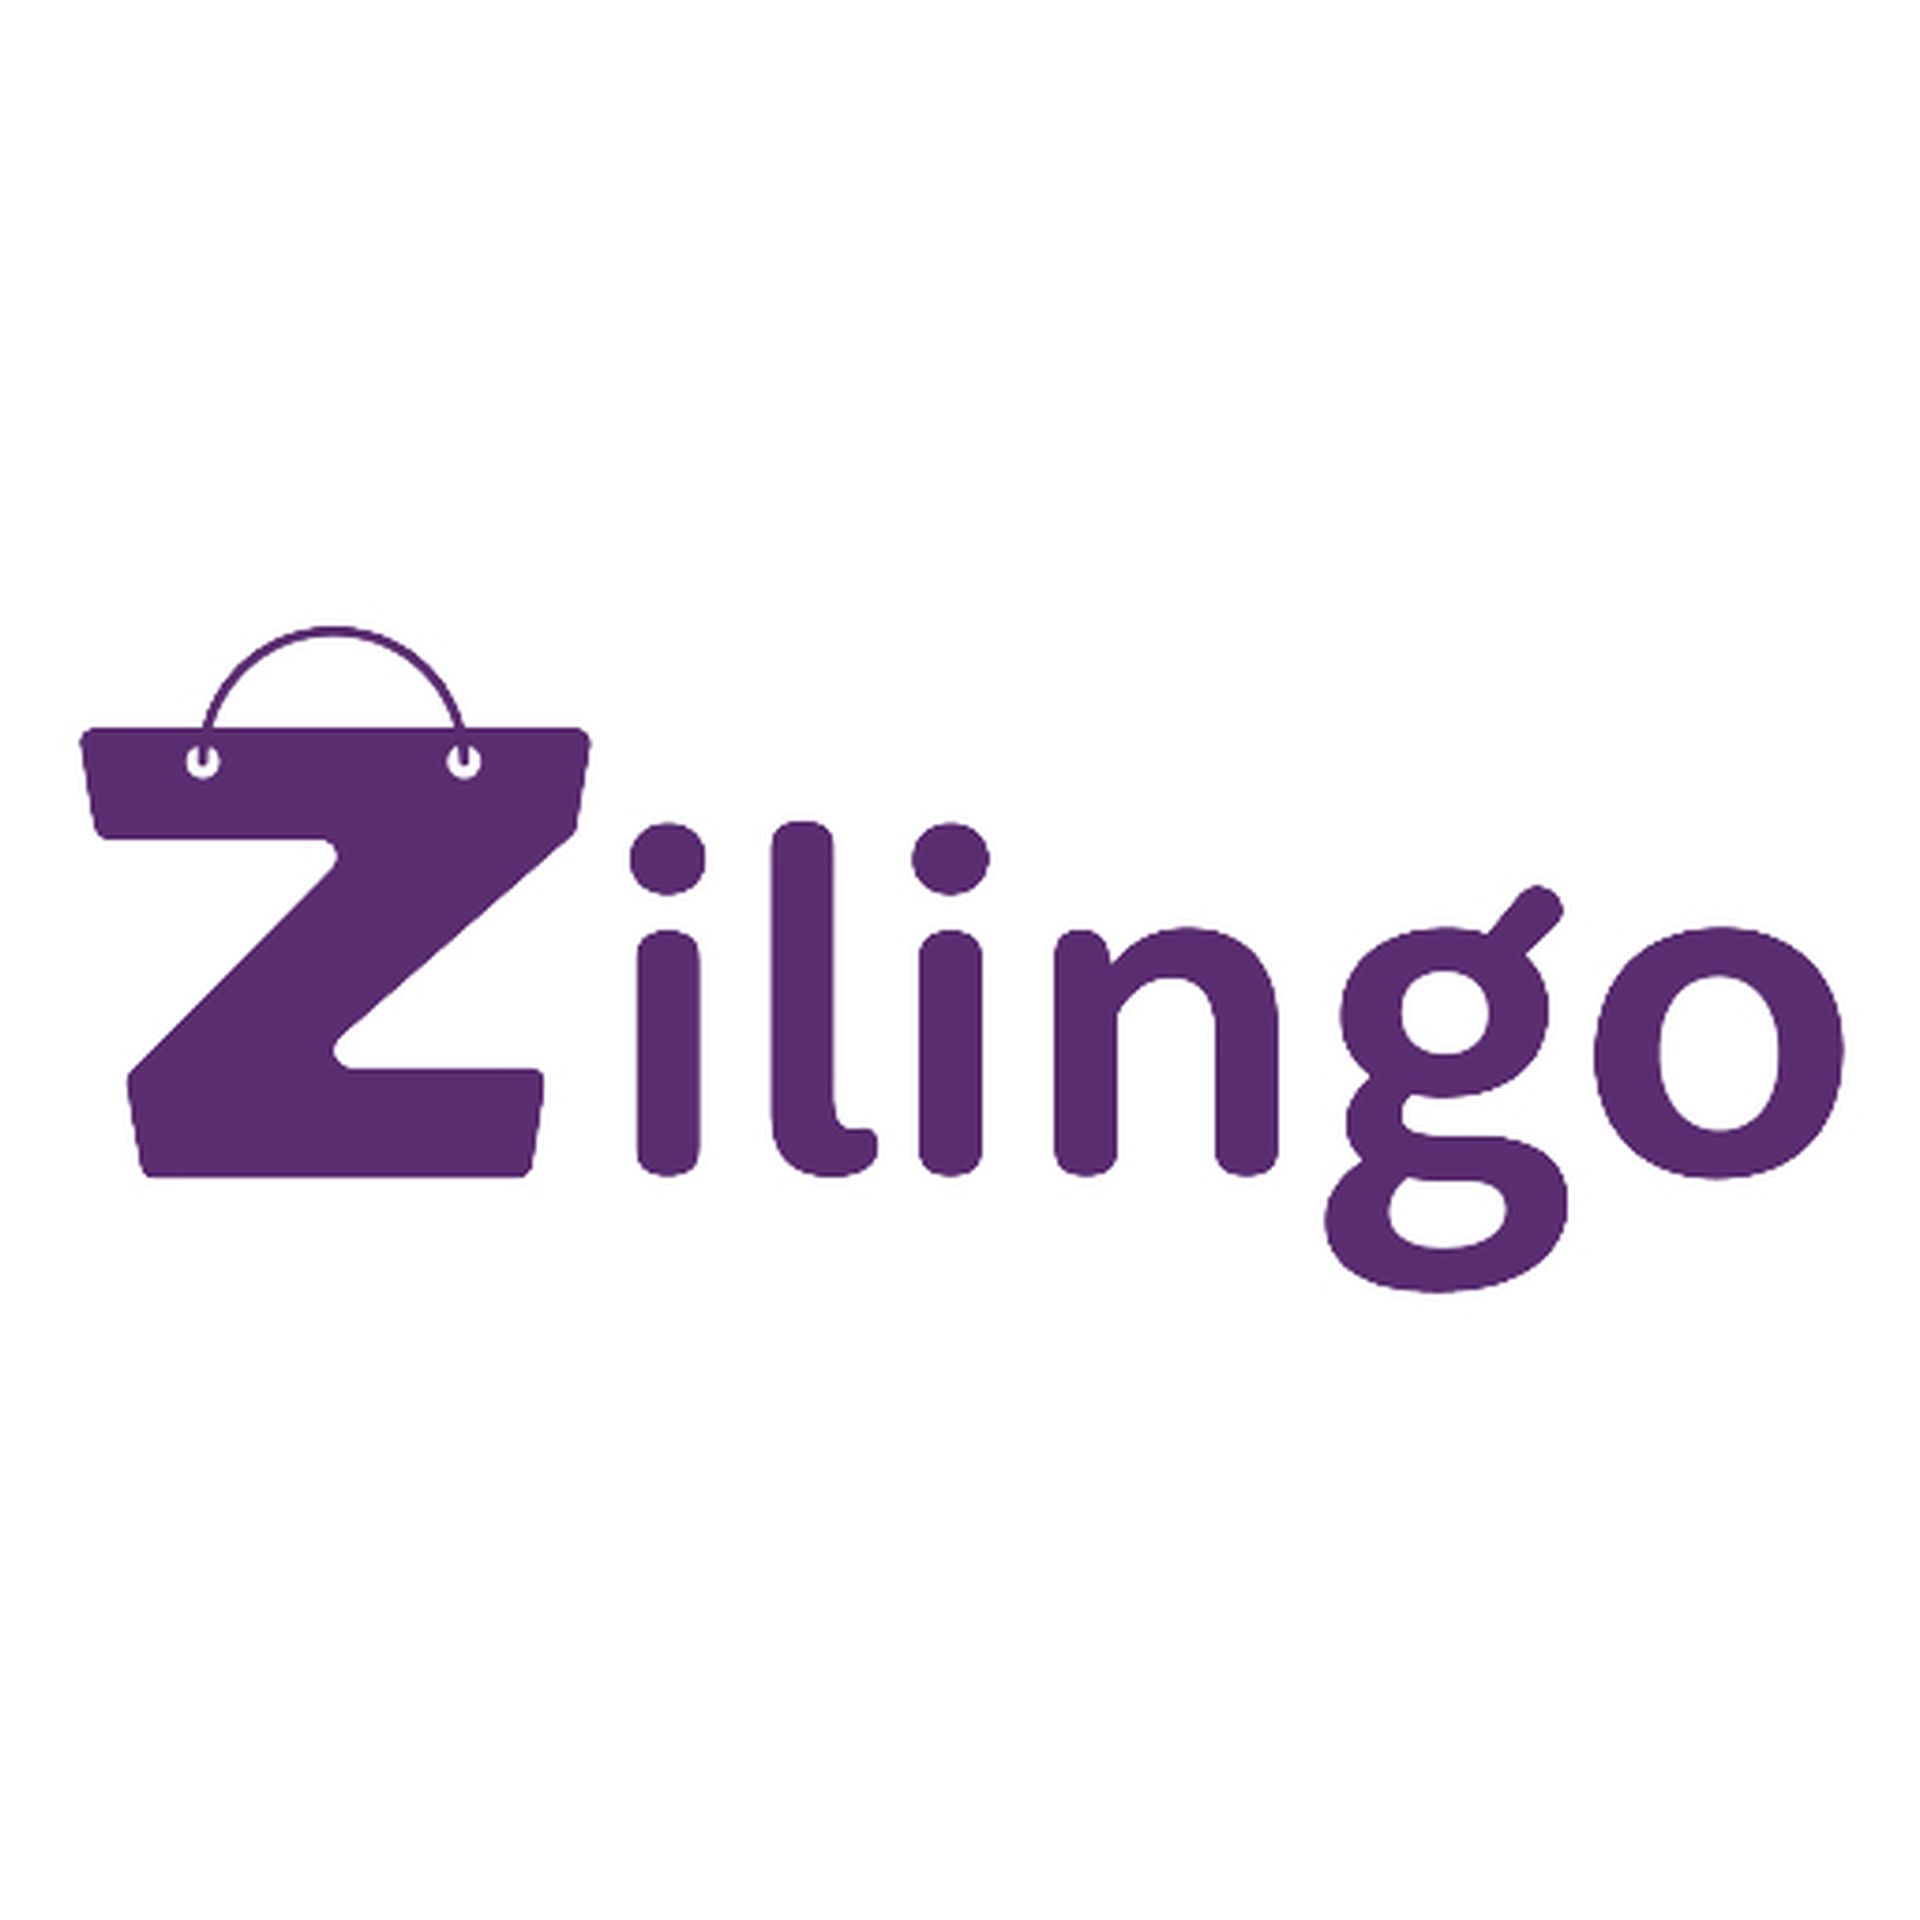  Zilingo  Pte Ltd is hiring a Operations Manager Zilingo  